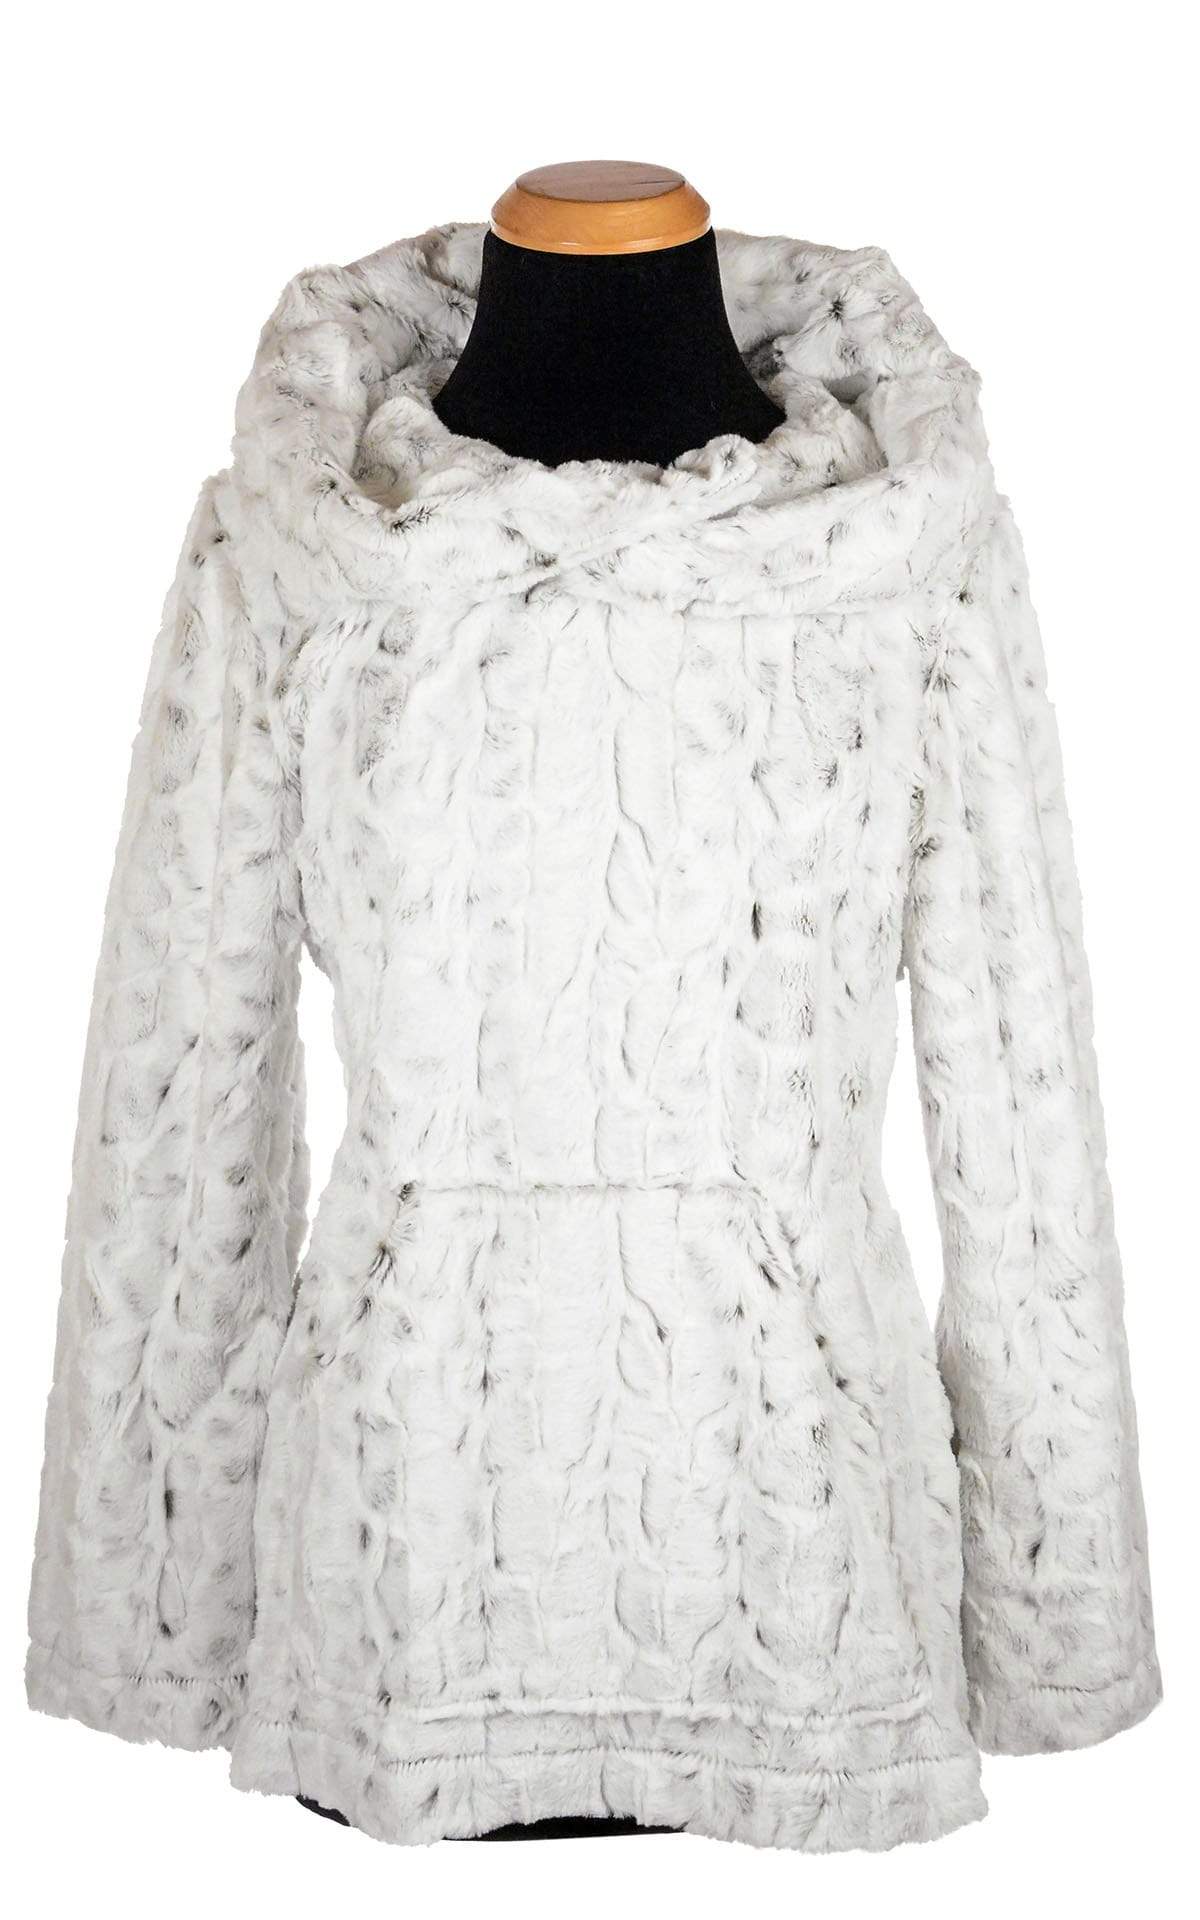 Hoody Lounger | Luxury Faux Fur in Winter Frost Faux Fur white with faint Black spots | Handmade By Pandemonium Millinery | Seattle WA